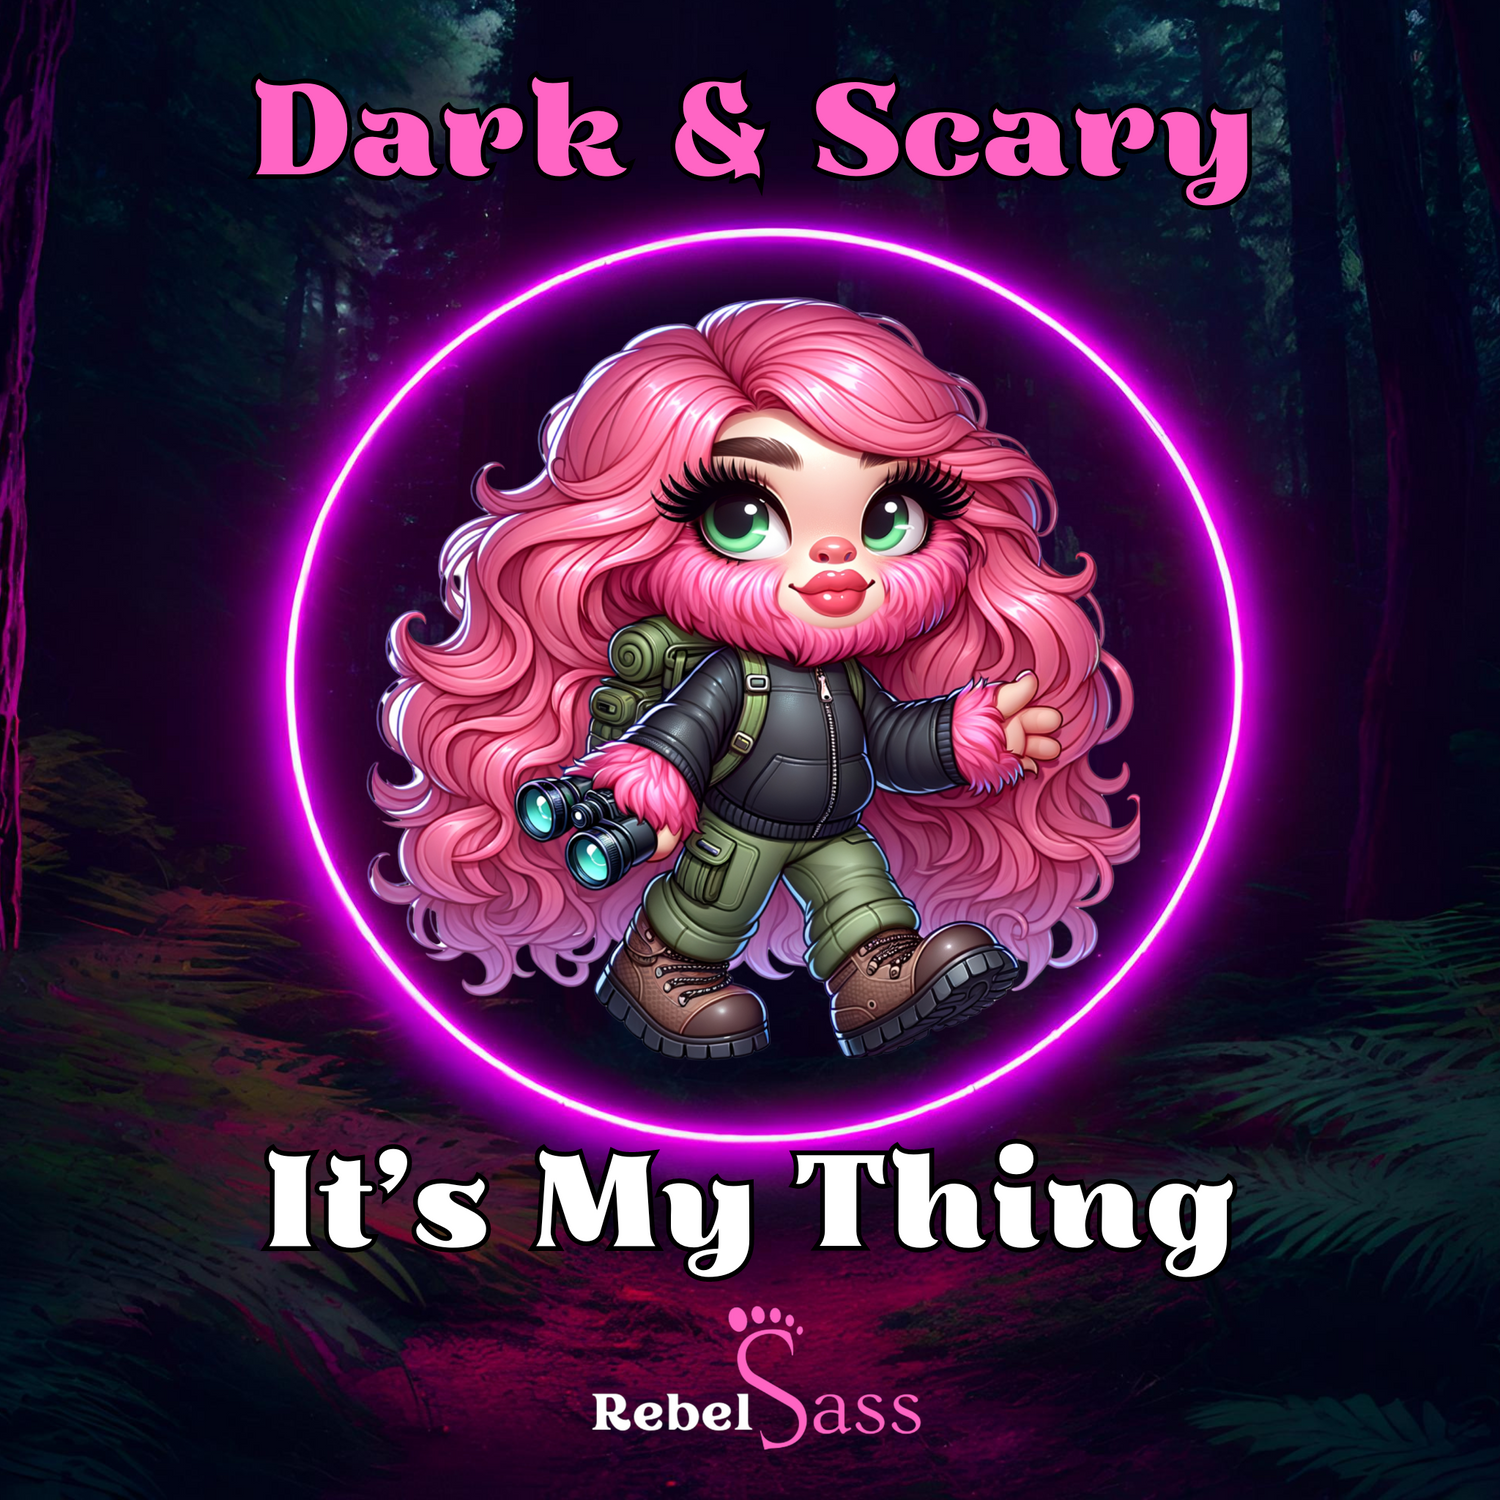 Dark & Scary It's My Thing -Design- RebelSassBigfoot.com